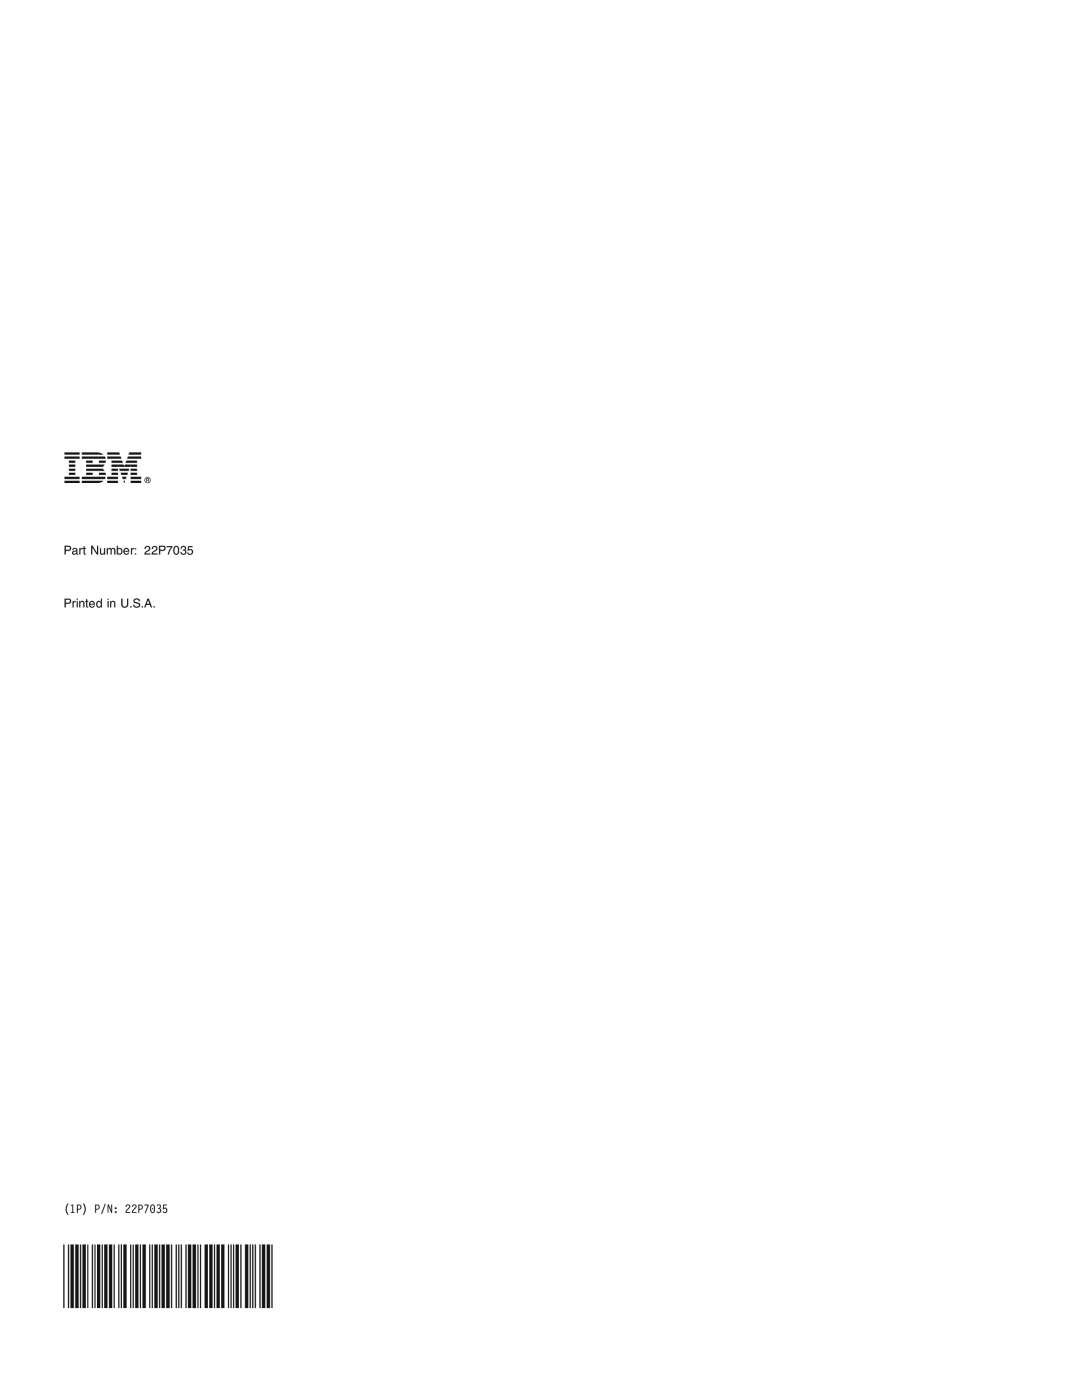 IBM manual Part Number 22P7035 Printed in U.S.A, 1P P/N 22P7035 